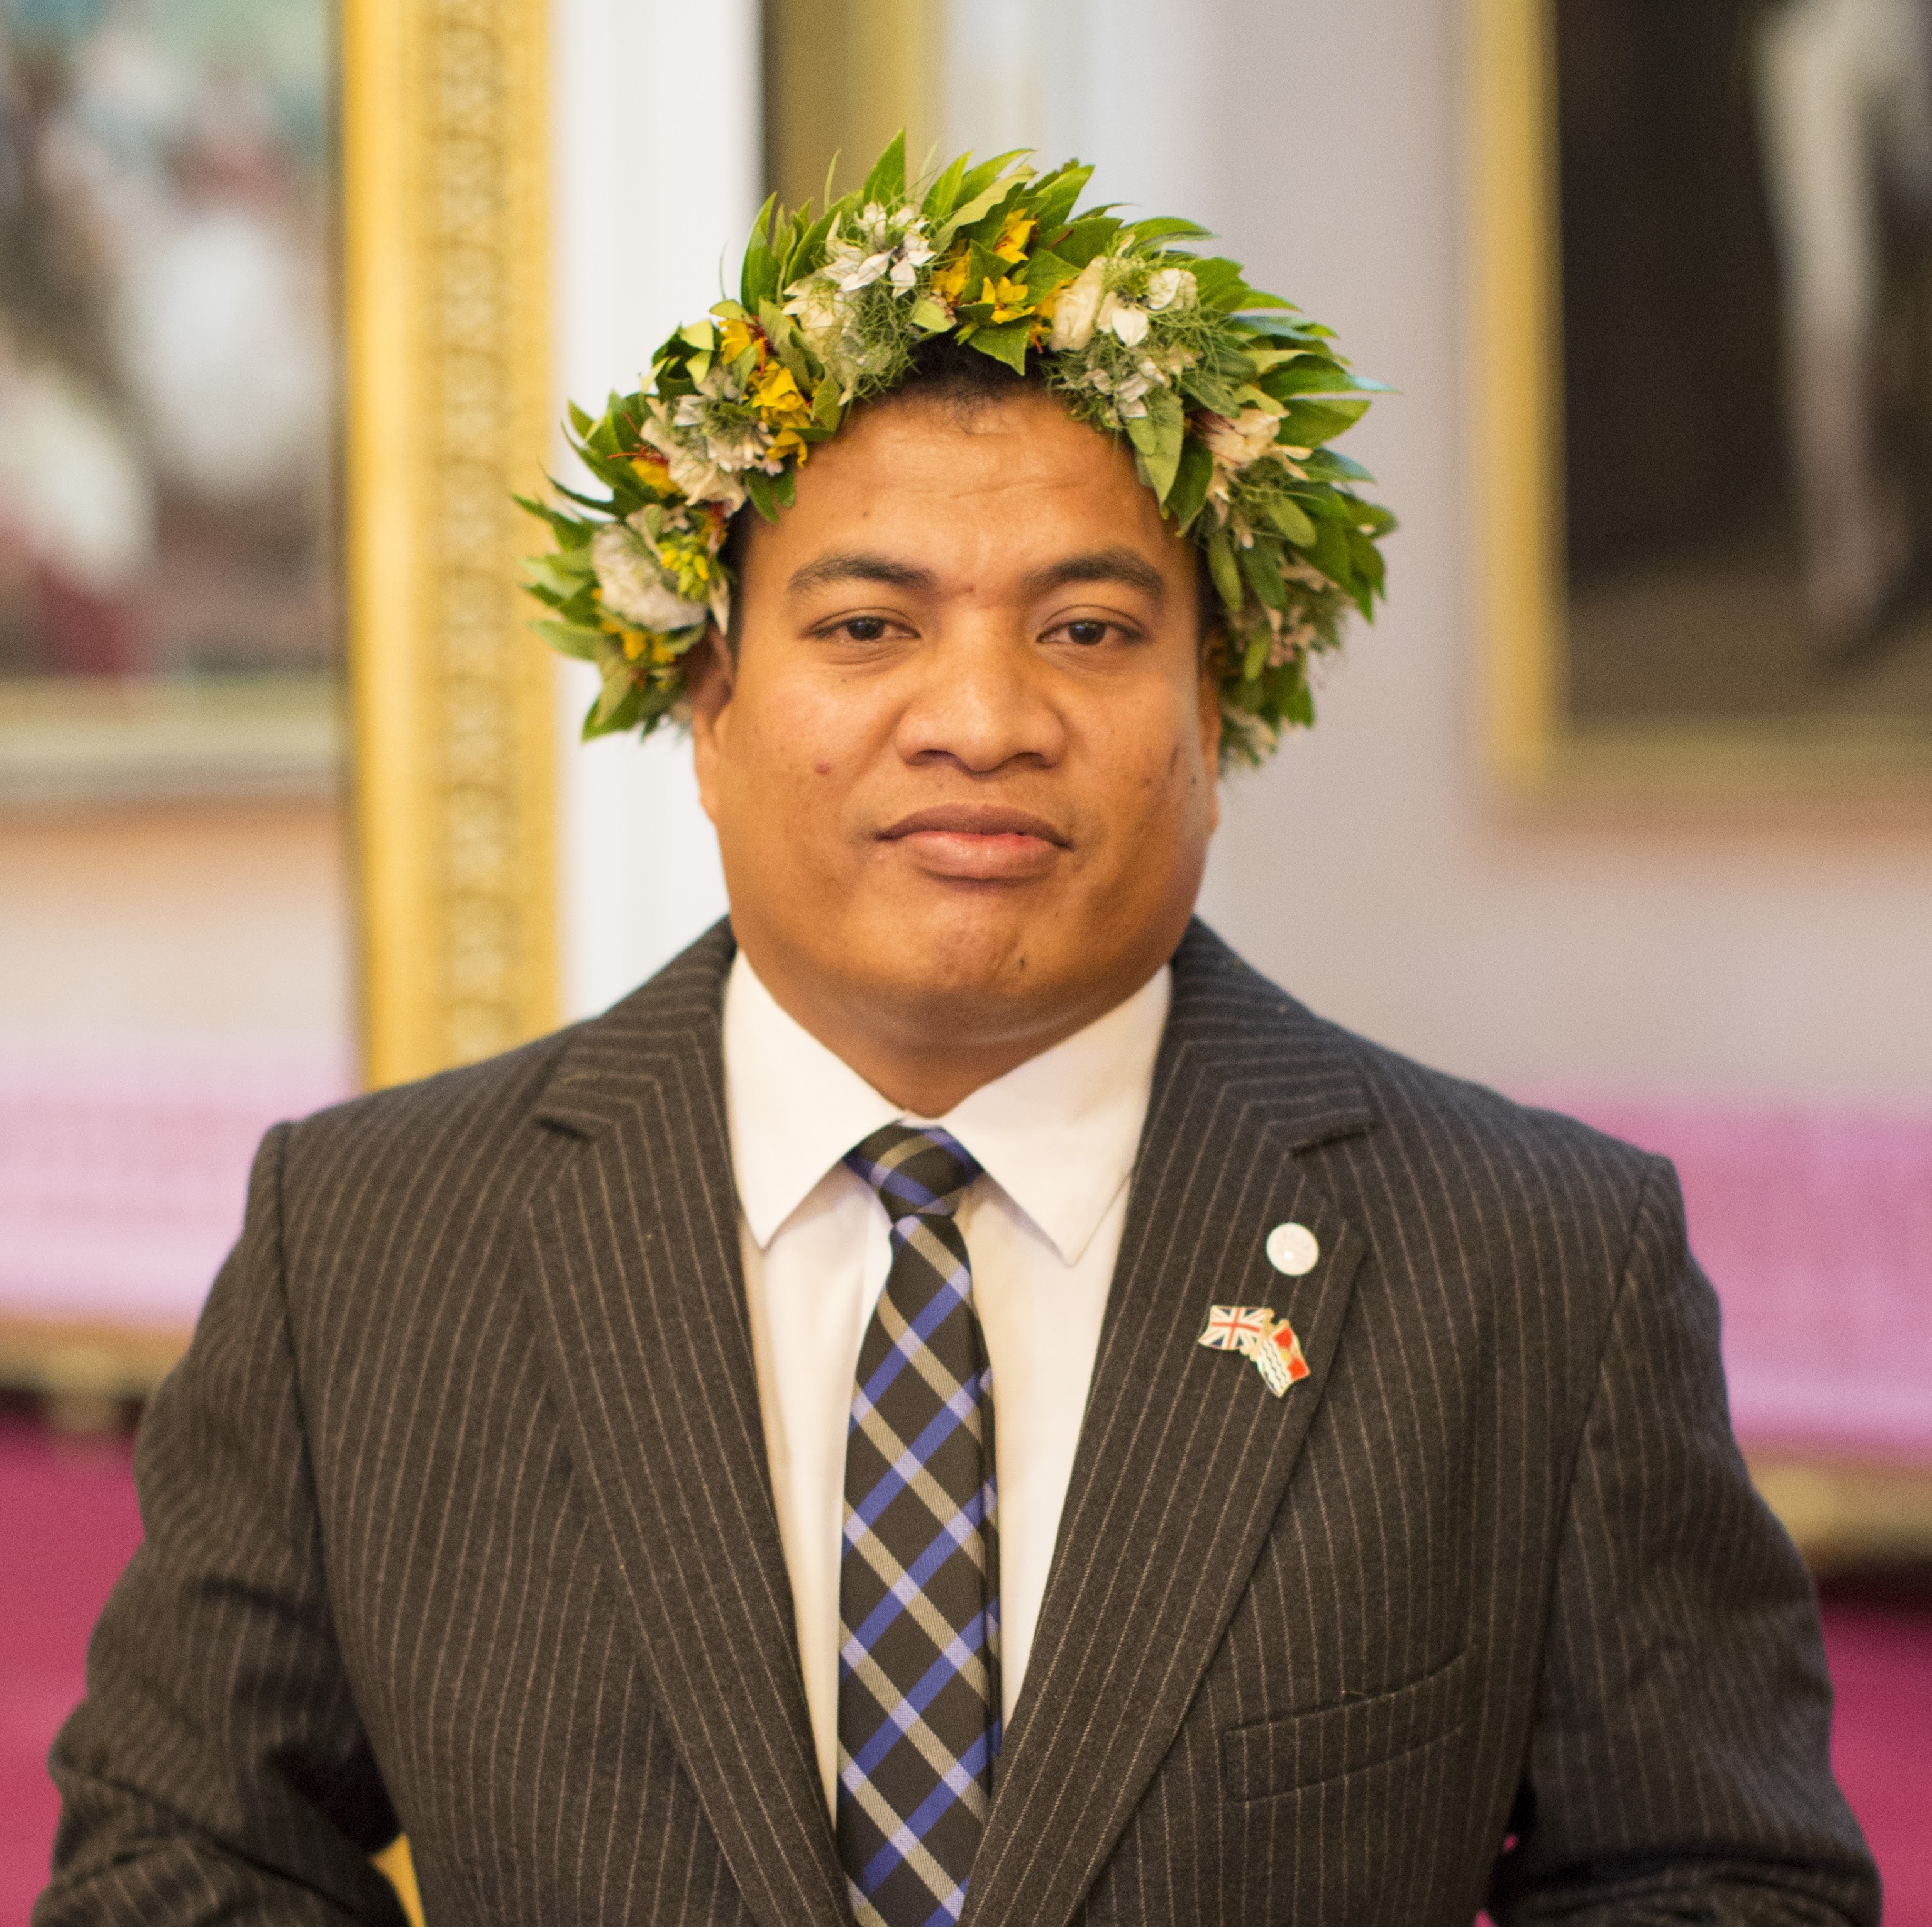 Tabotabo Auatabu 2016 Queen's Young Leader from Kiribati